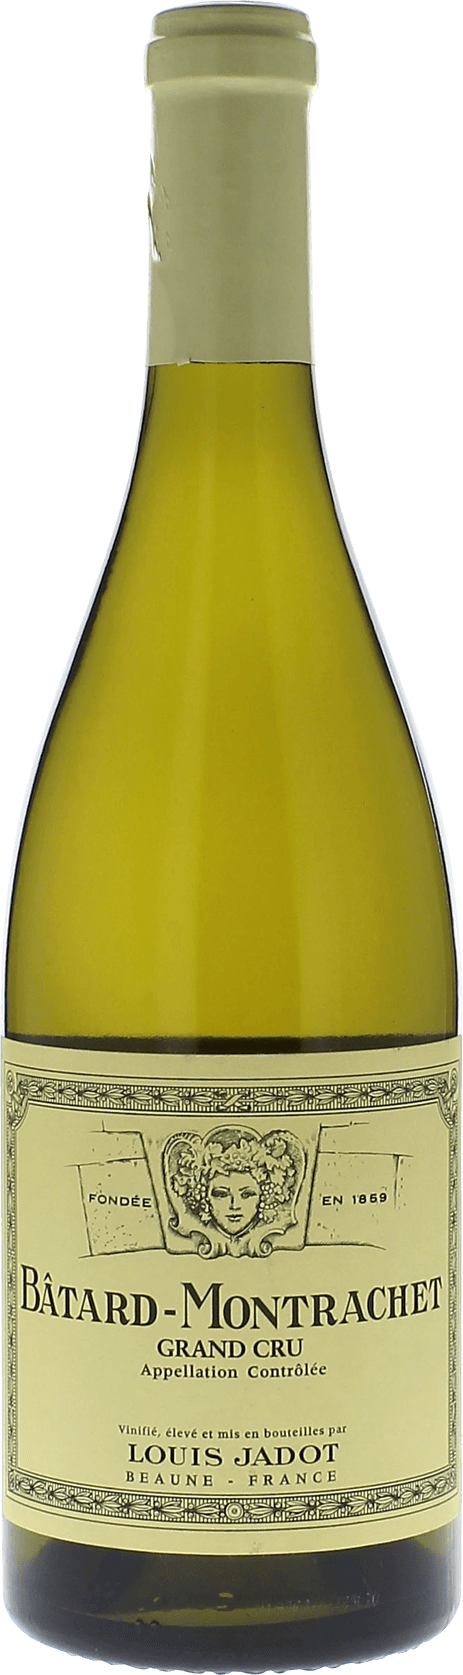 Batard montrachet grand cru 2017  Jadot Louis, Bourgogne blanc